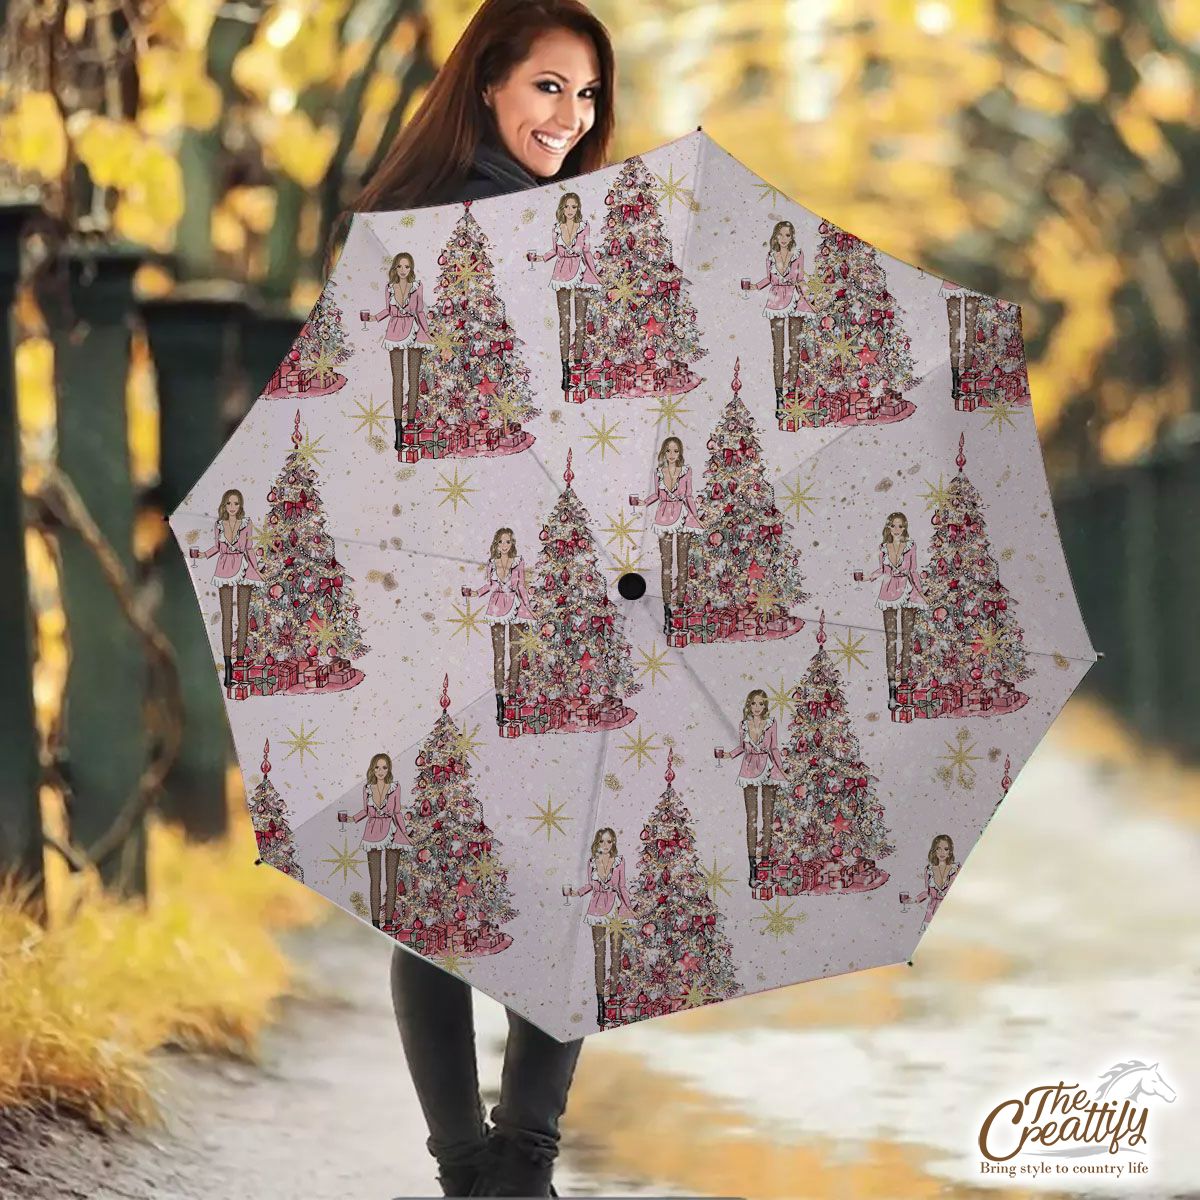 Girl With Pink Christmas Tree Umbrella